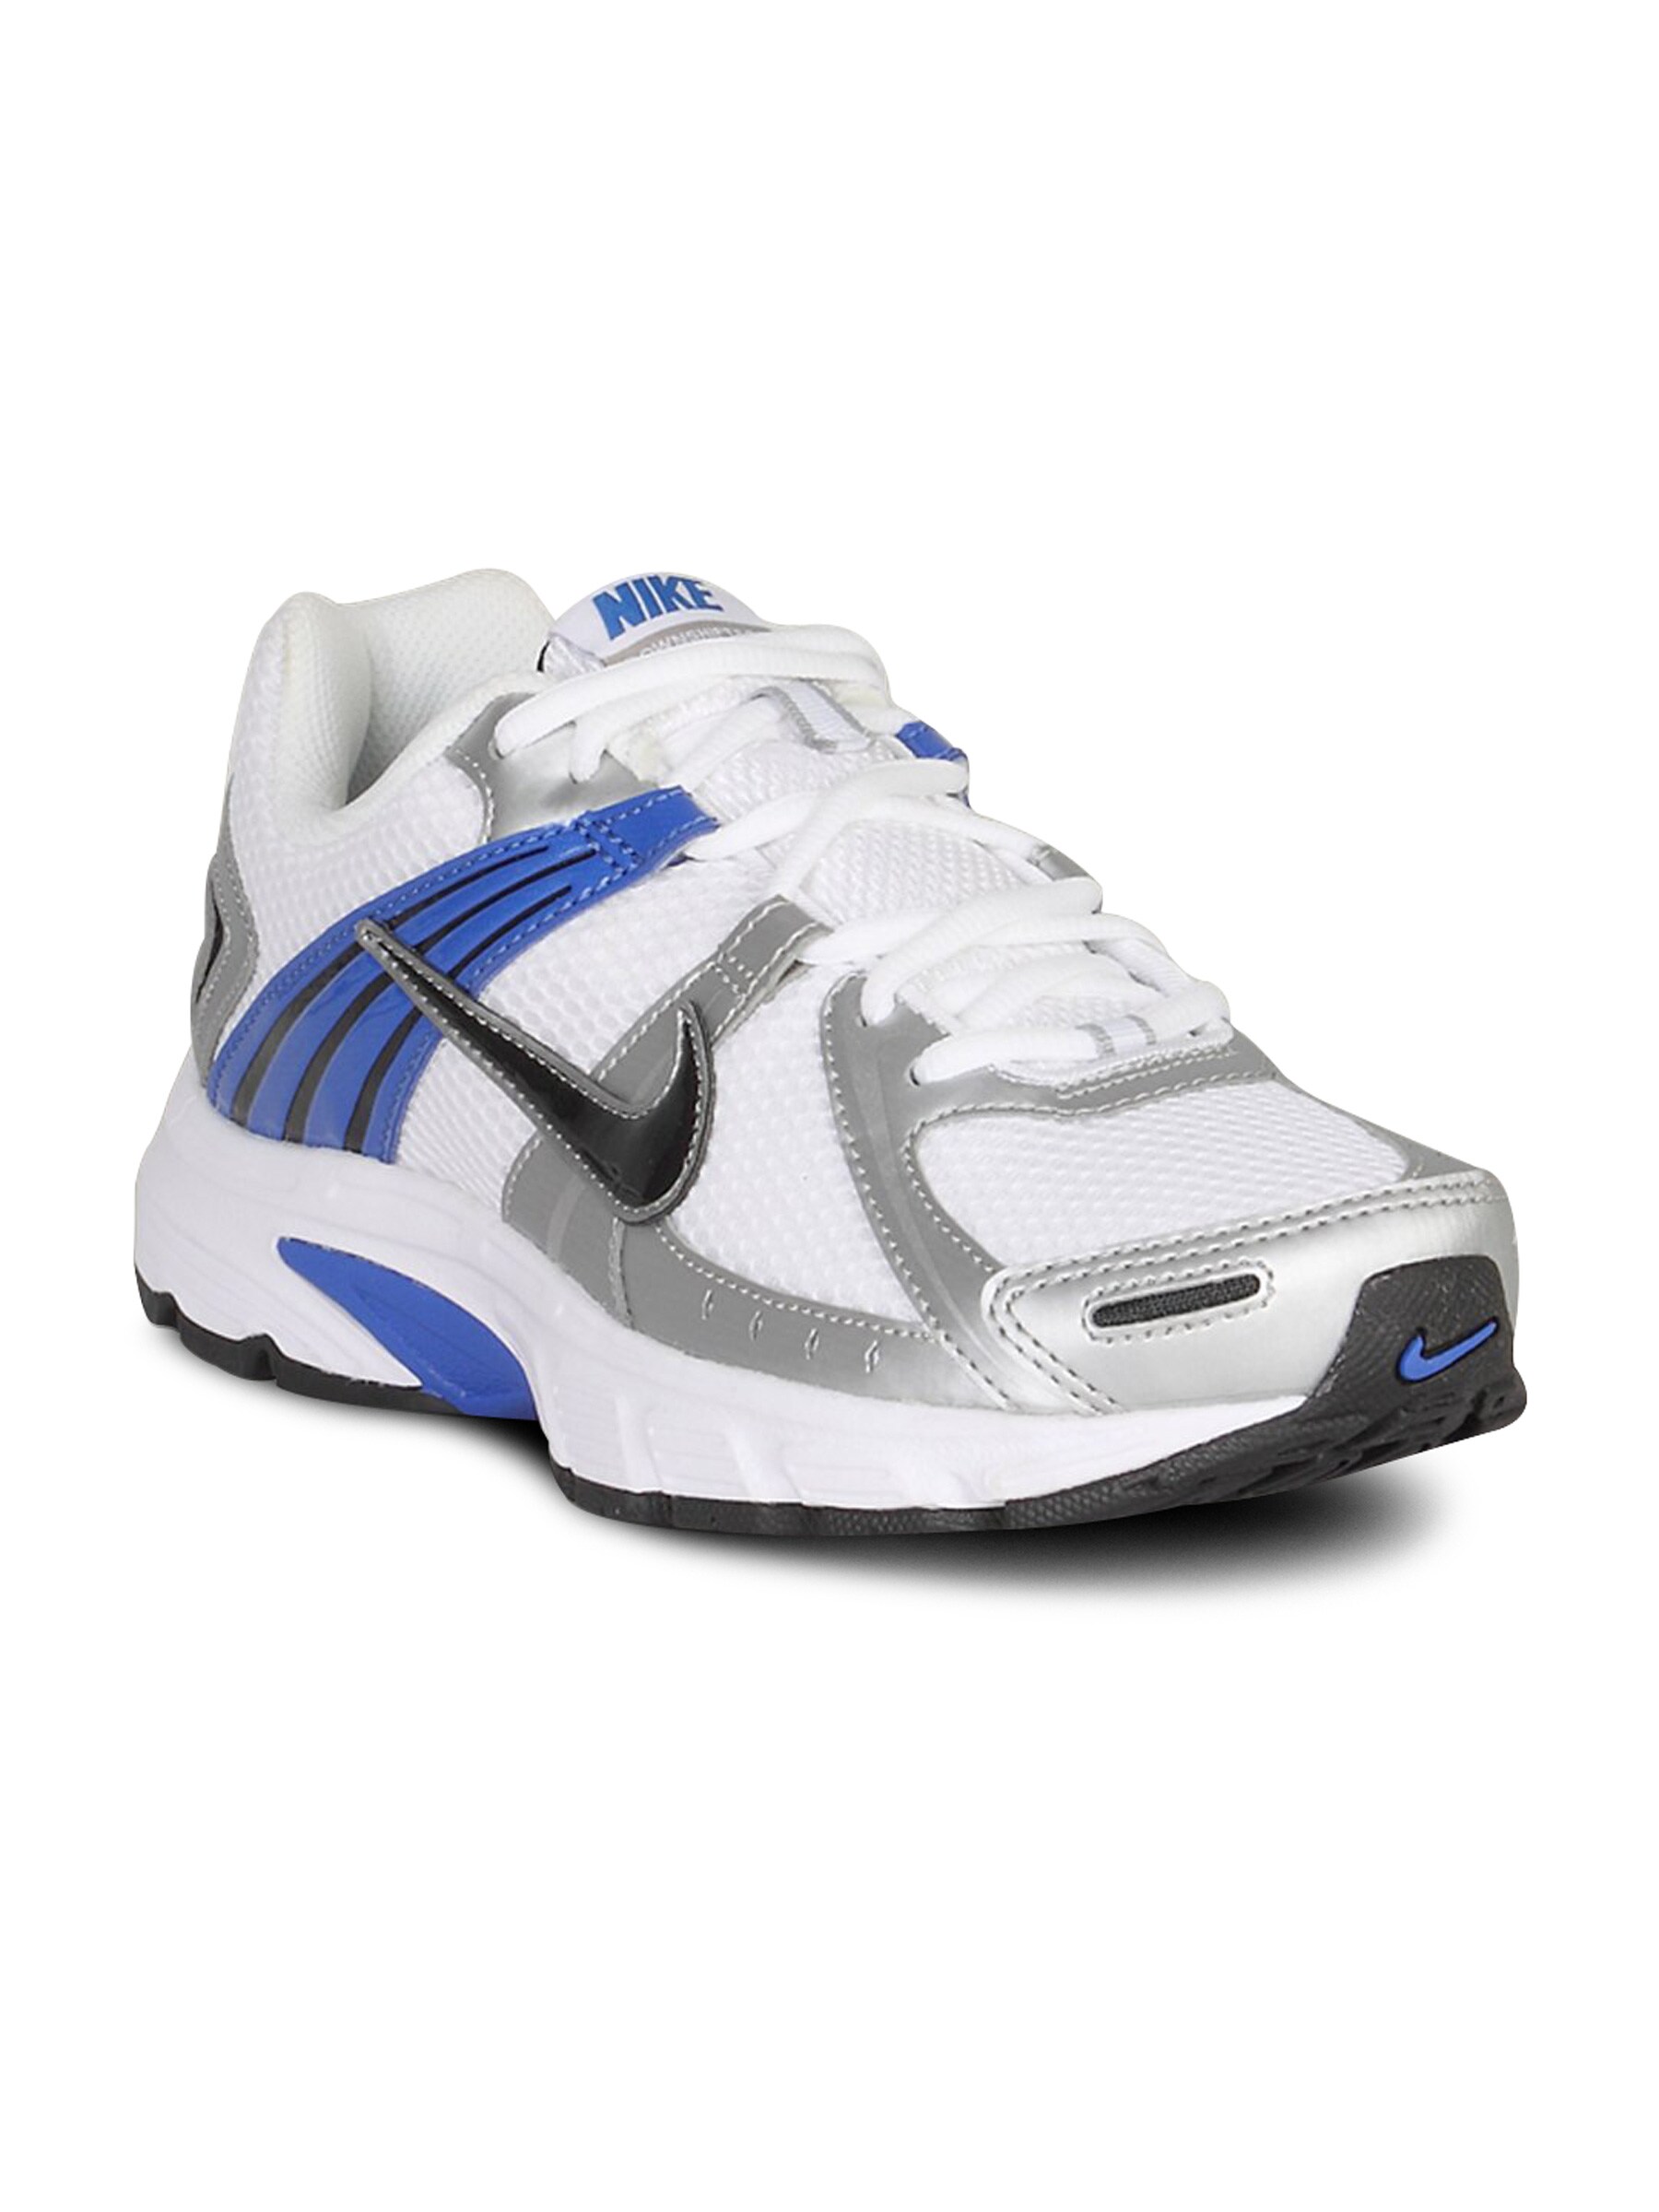 Nike Men's Downshifter White/Blue Shoe